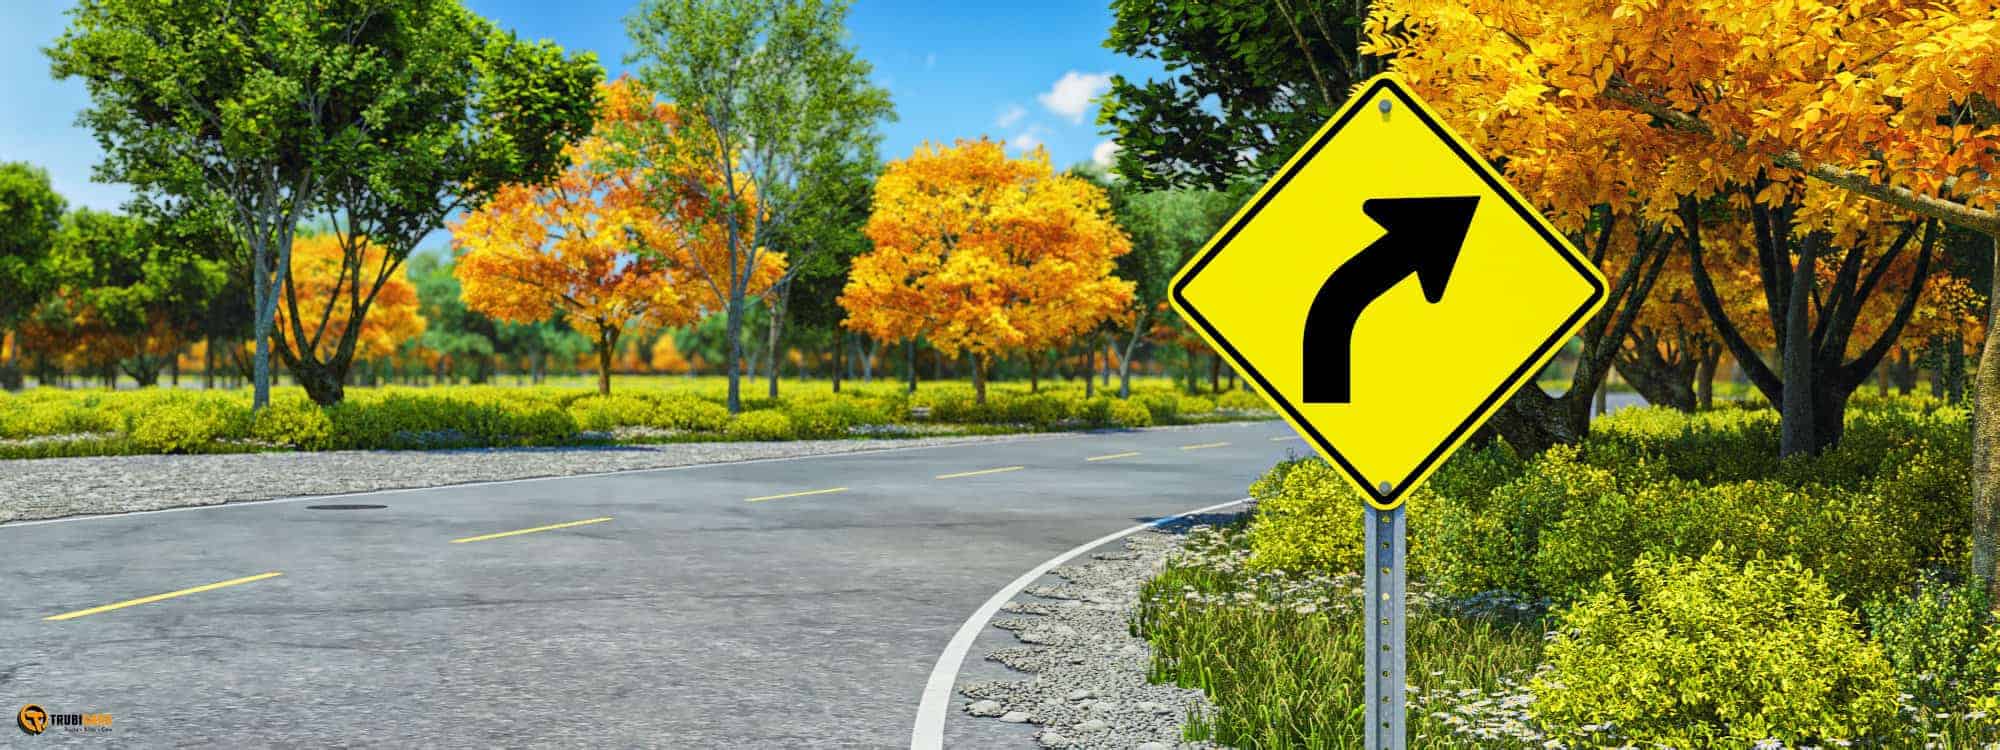 Road Curves Ahead Sign